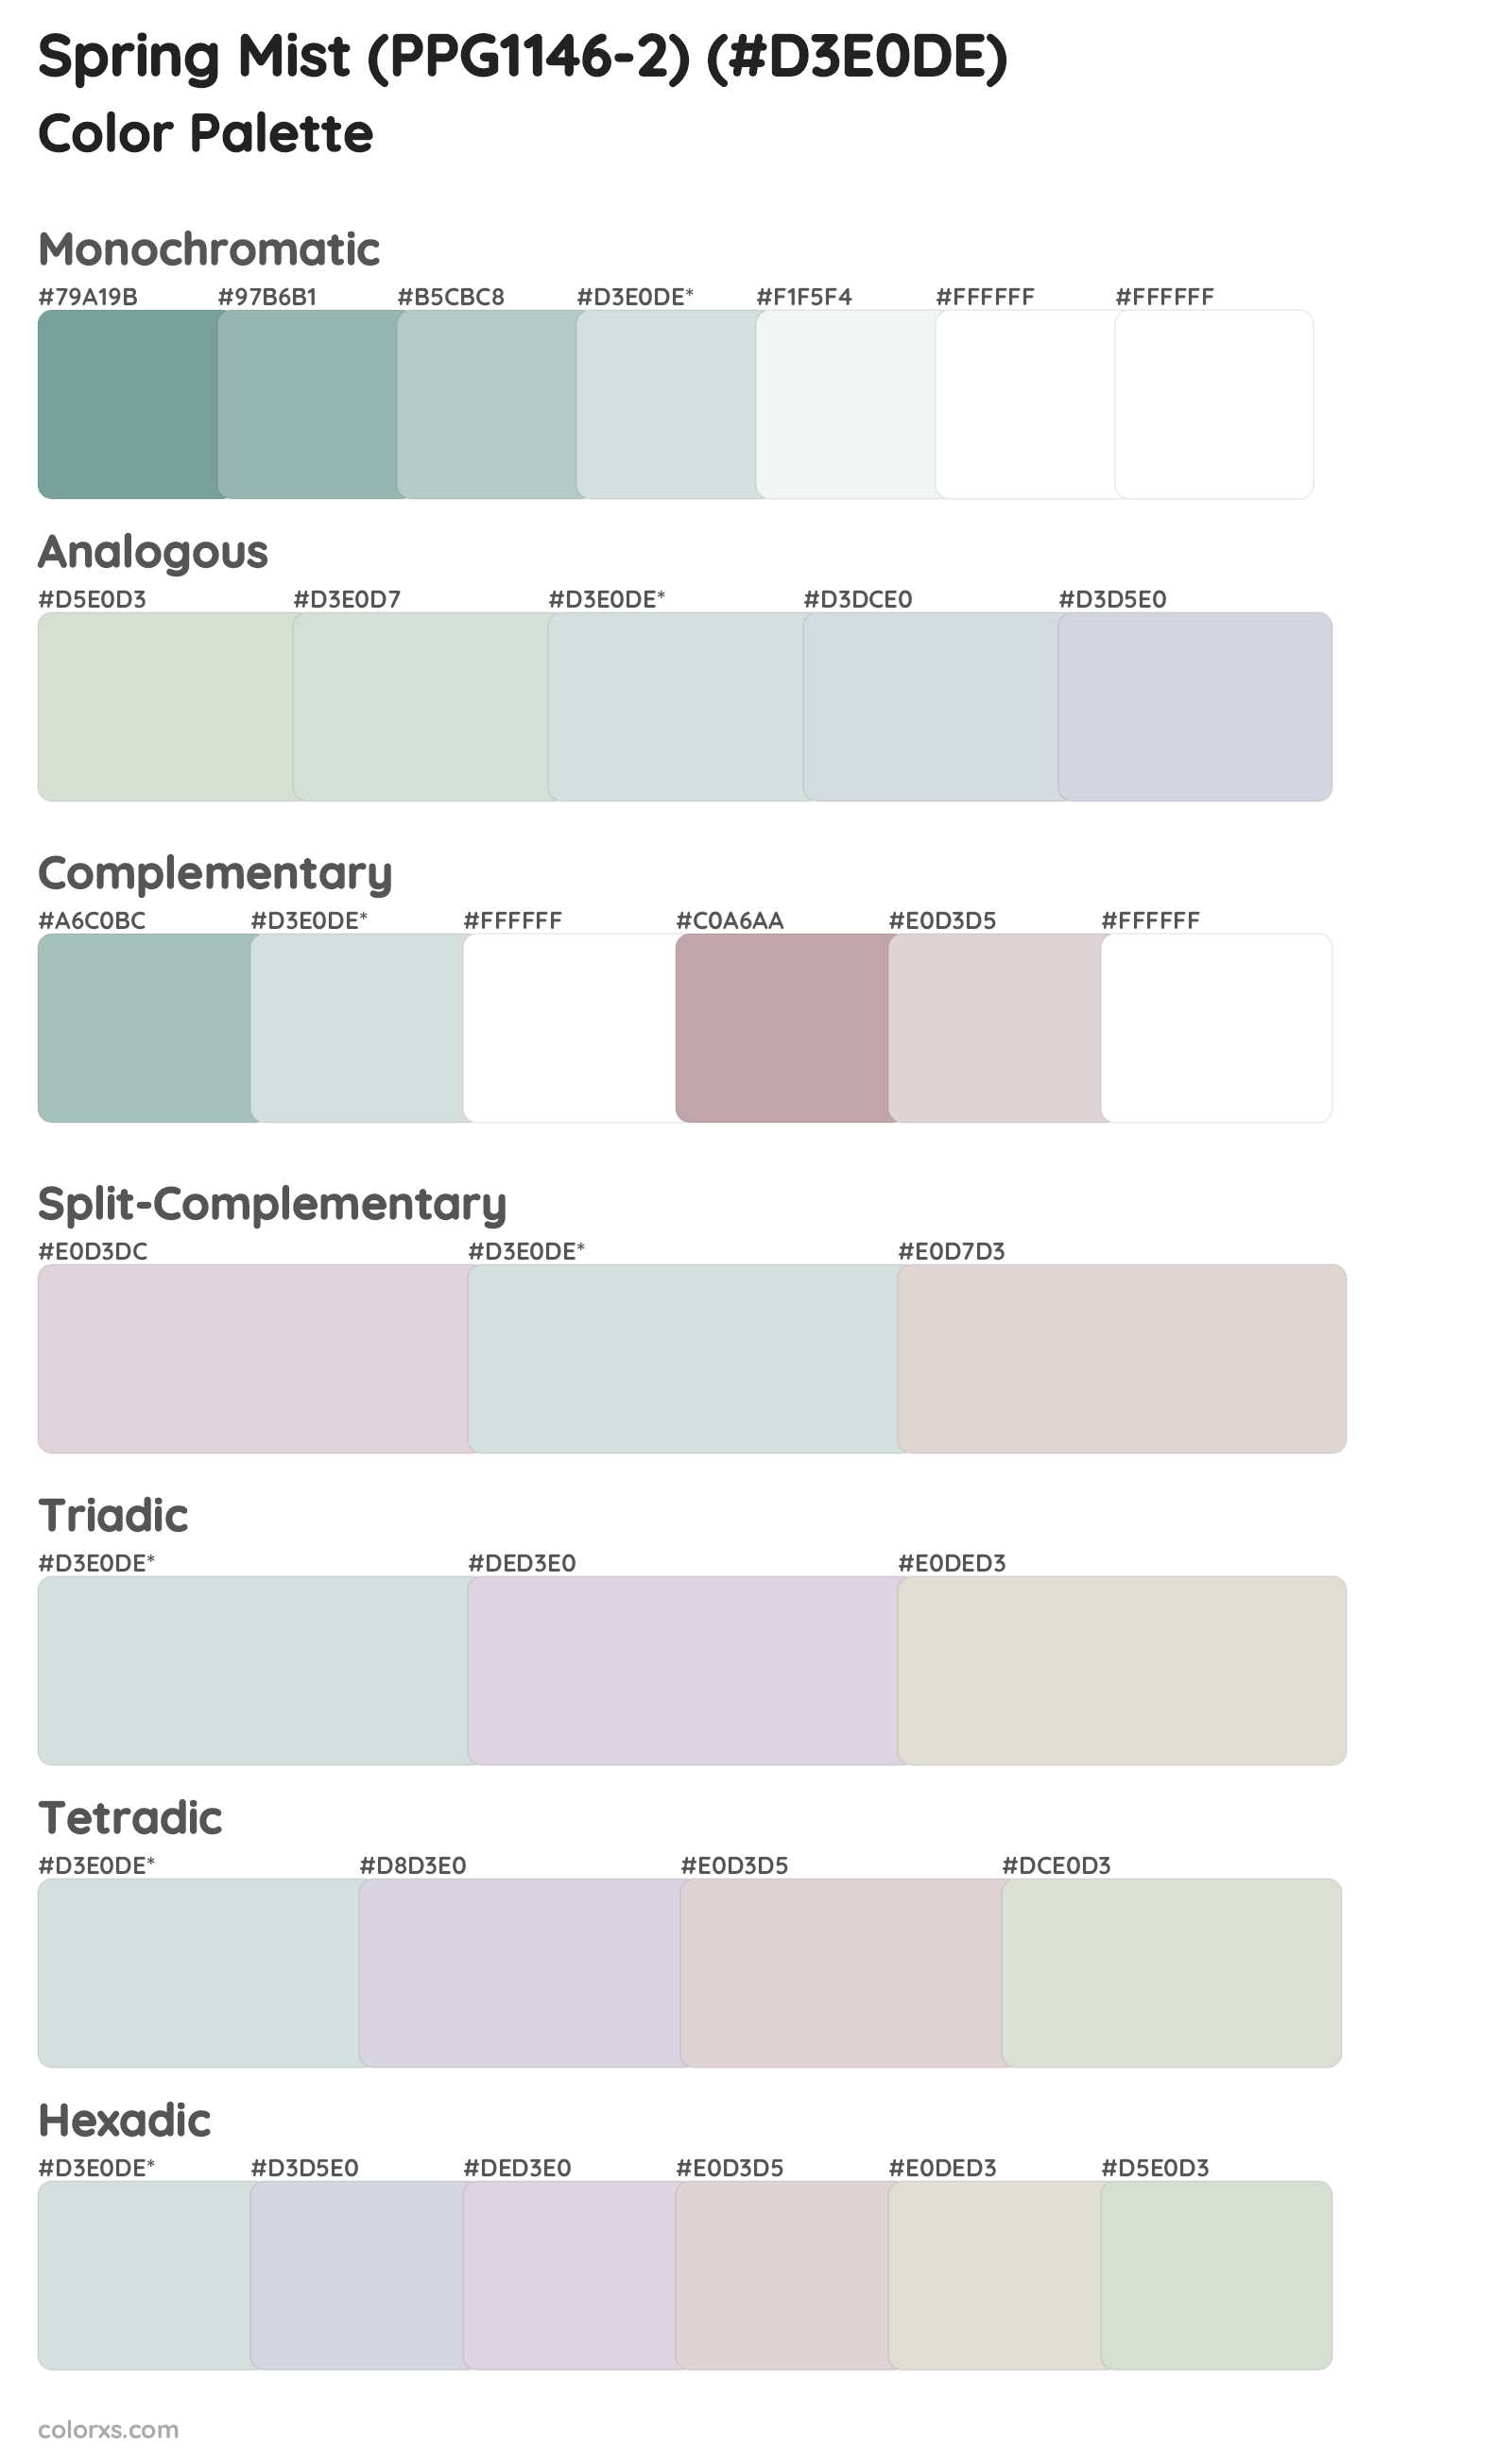 Spring Mist (PPG1146-2) Color Scheme Palettes